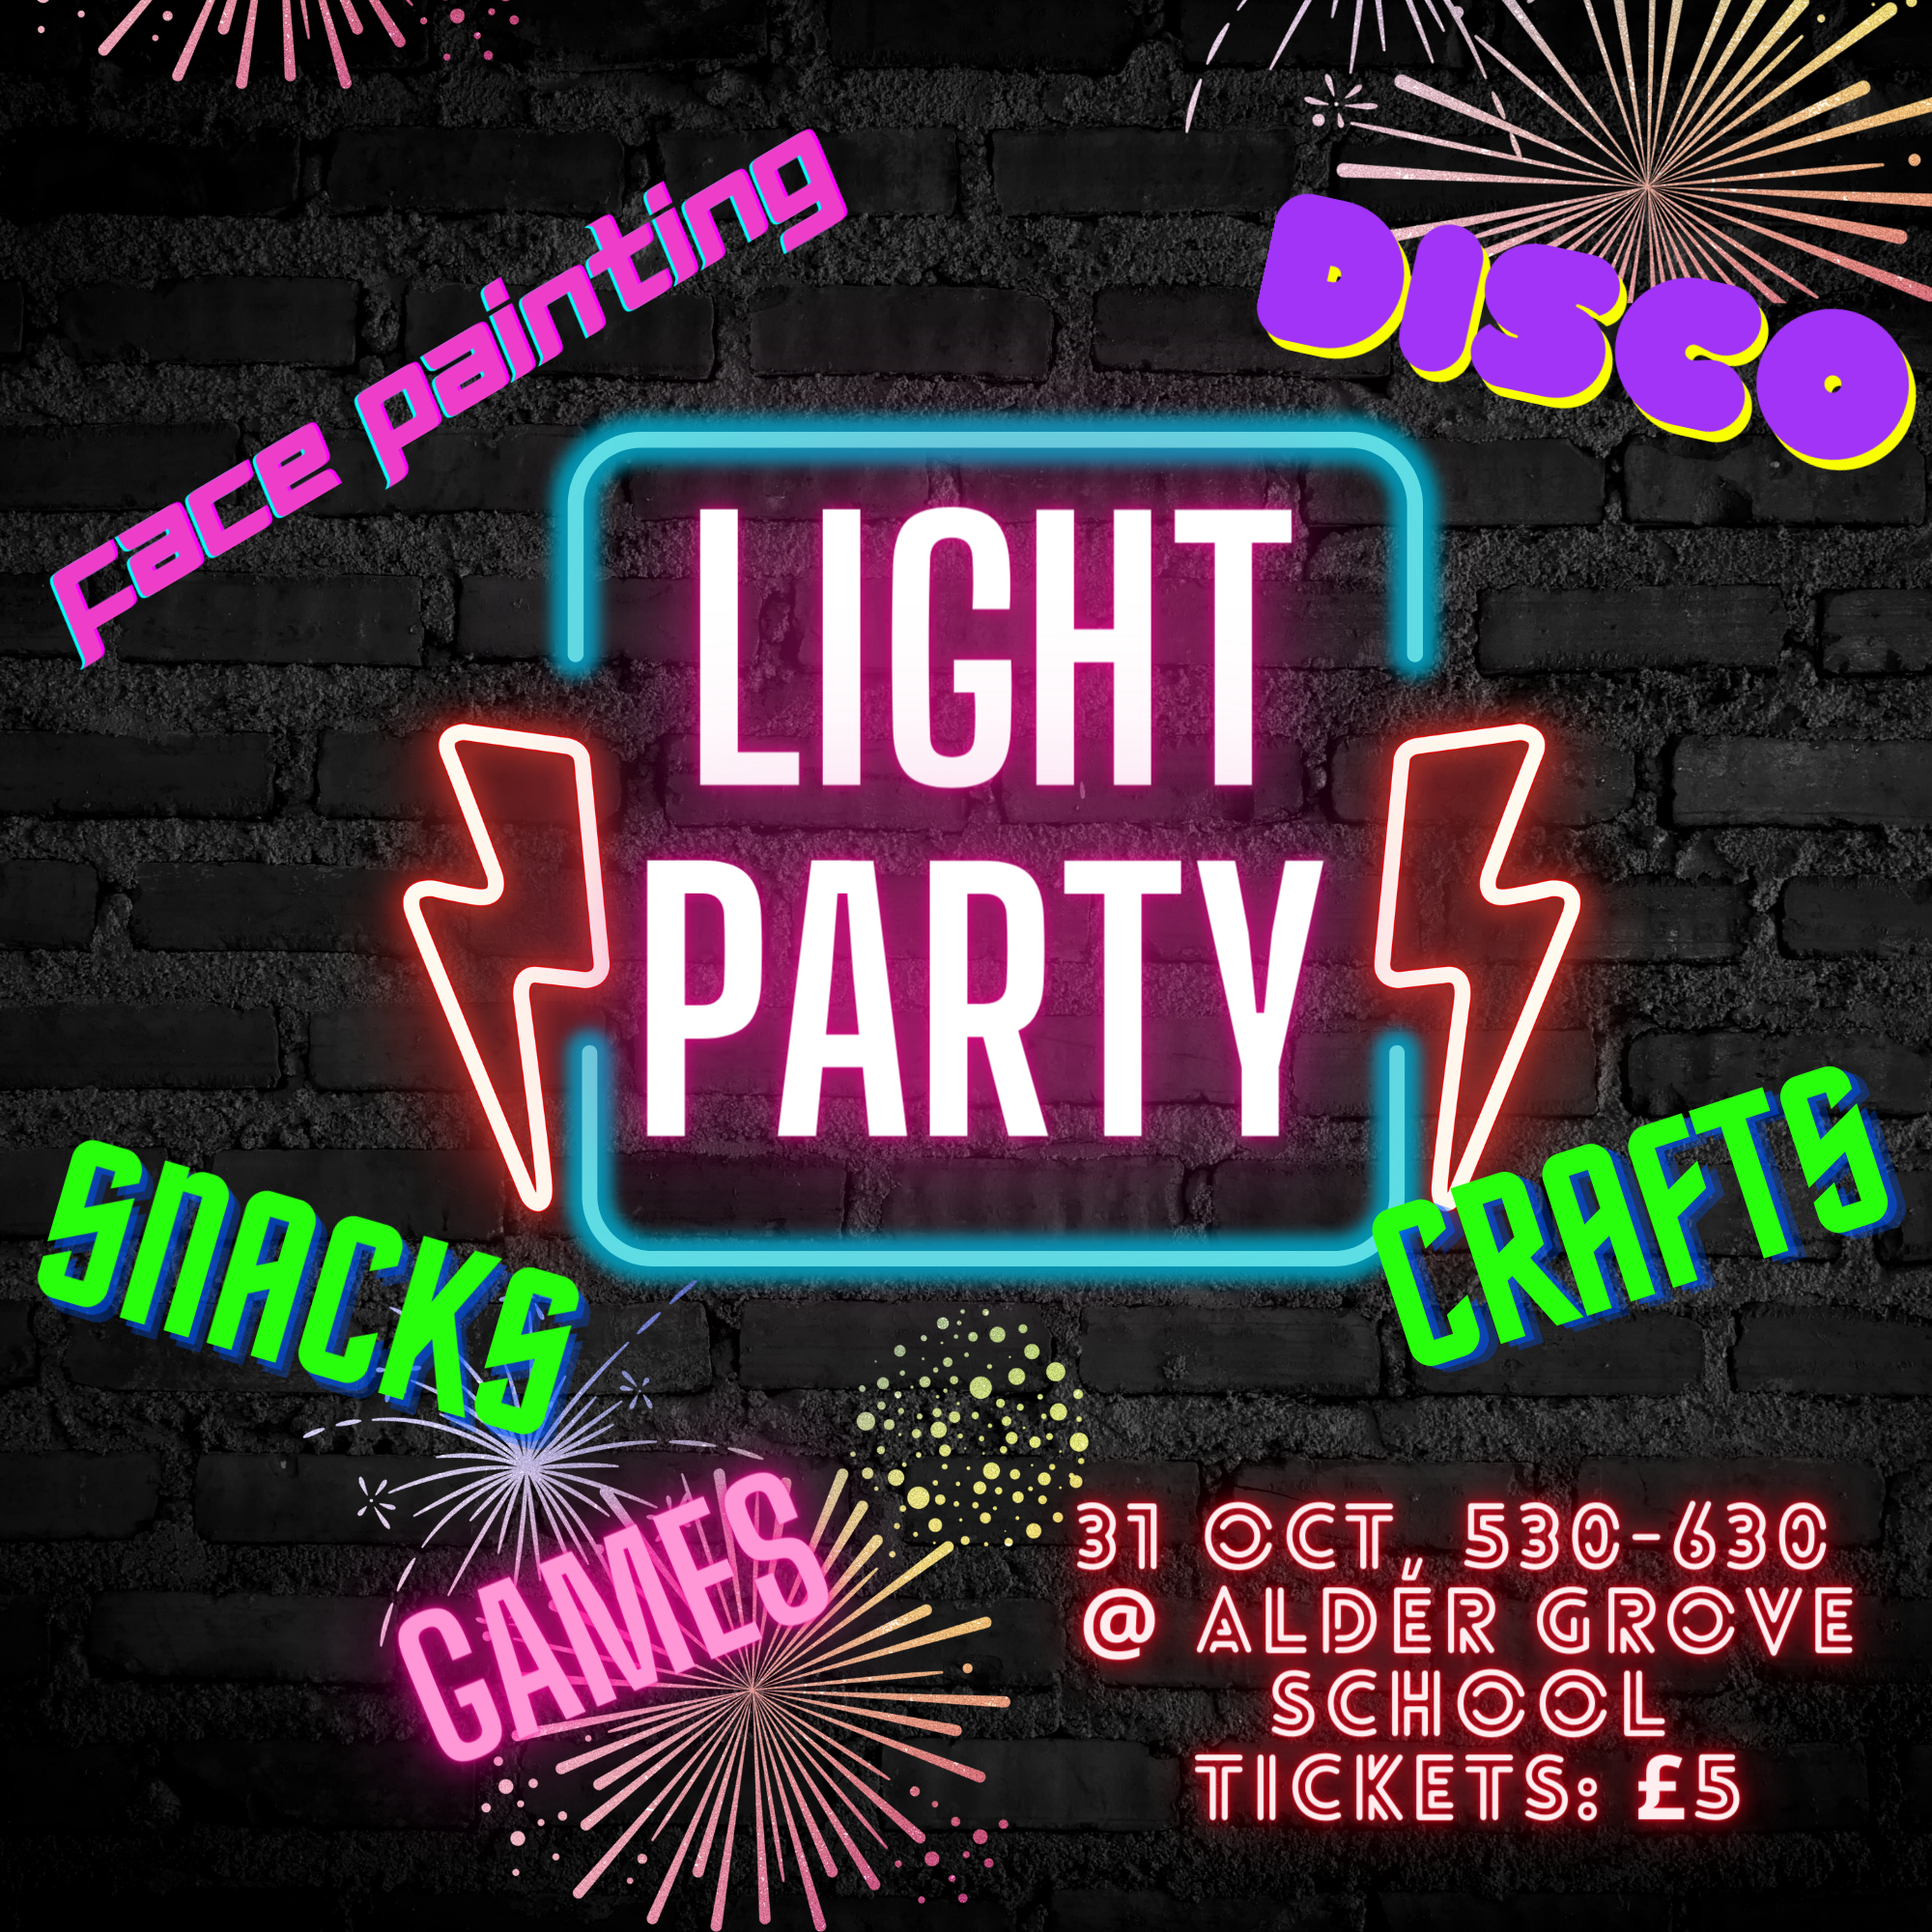 Light party invites